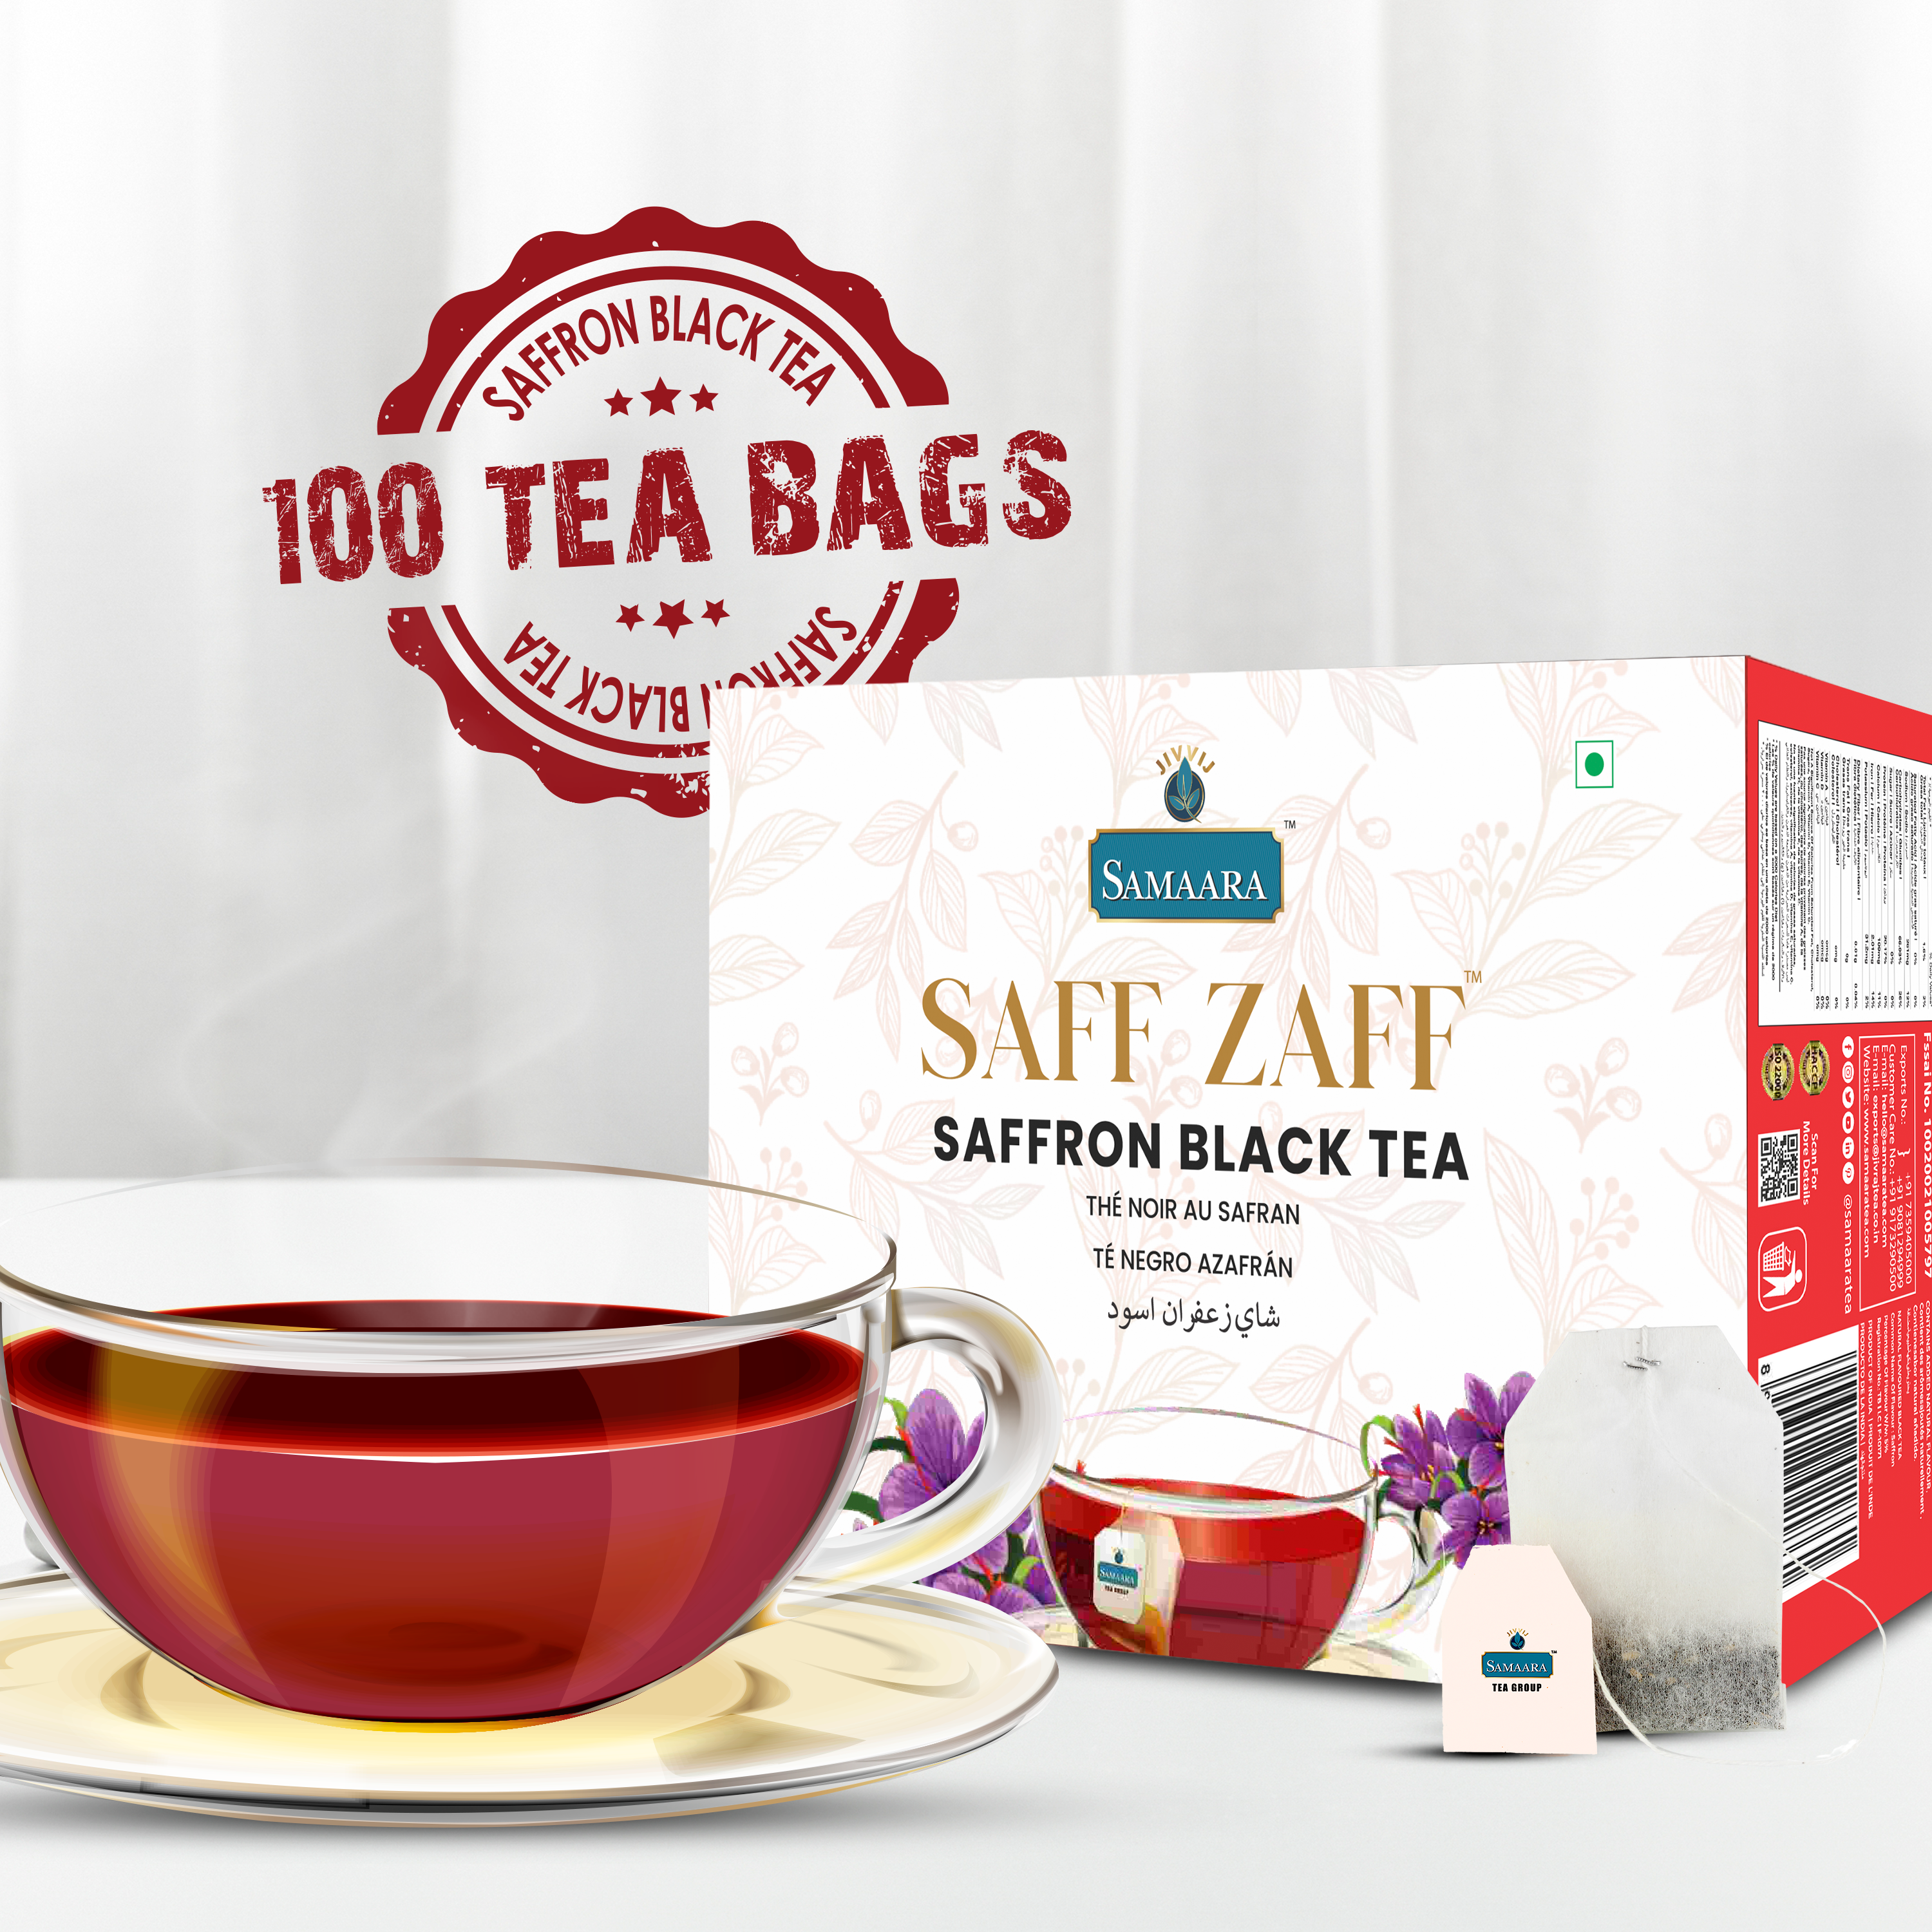 Jivvij samaara Saffron Black Tea 100 Tea Bags